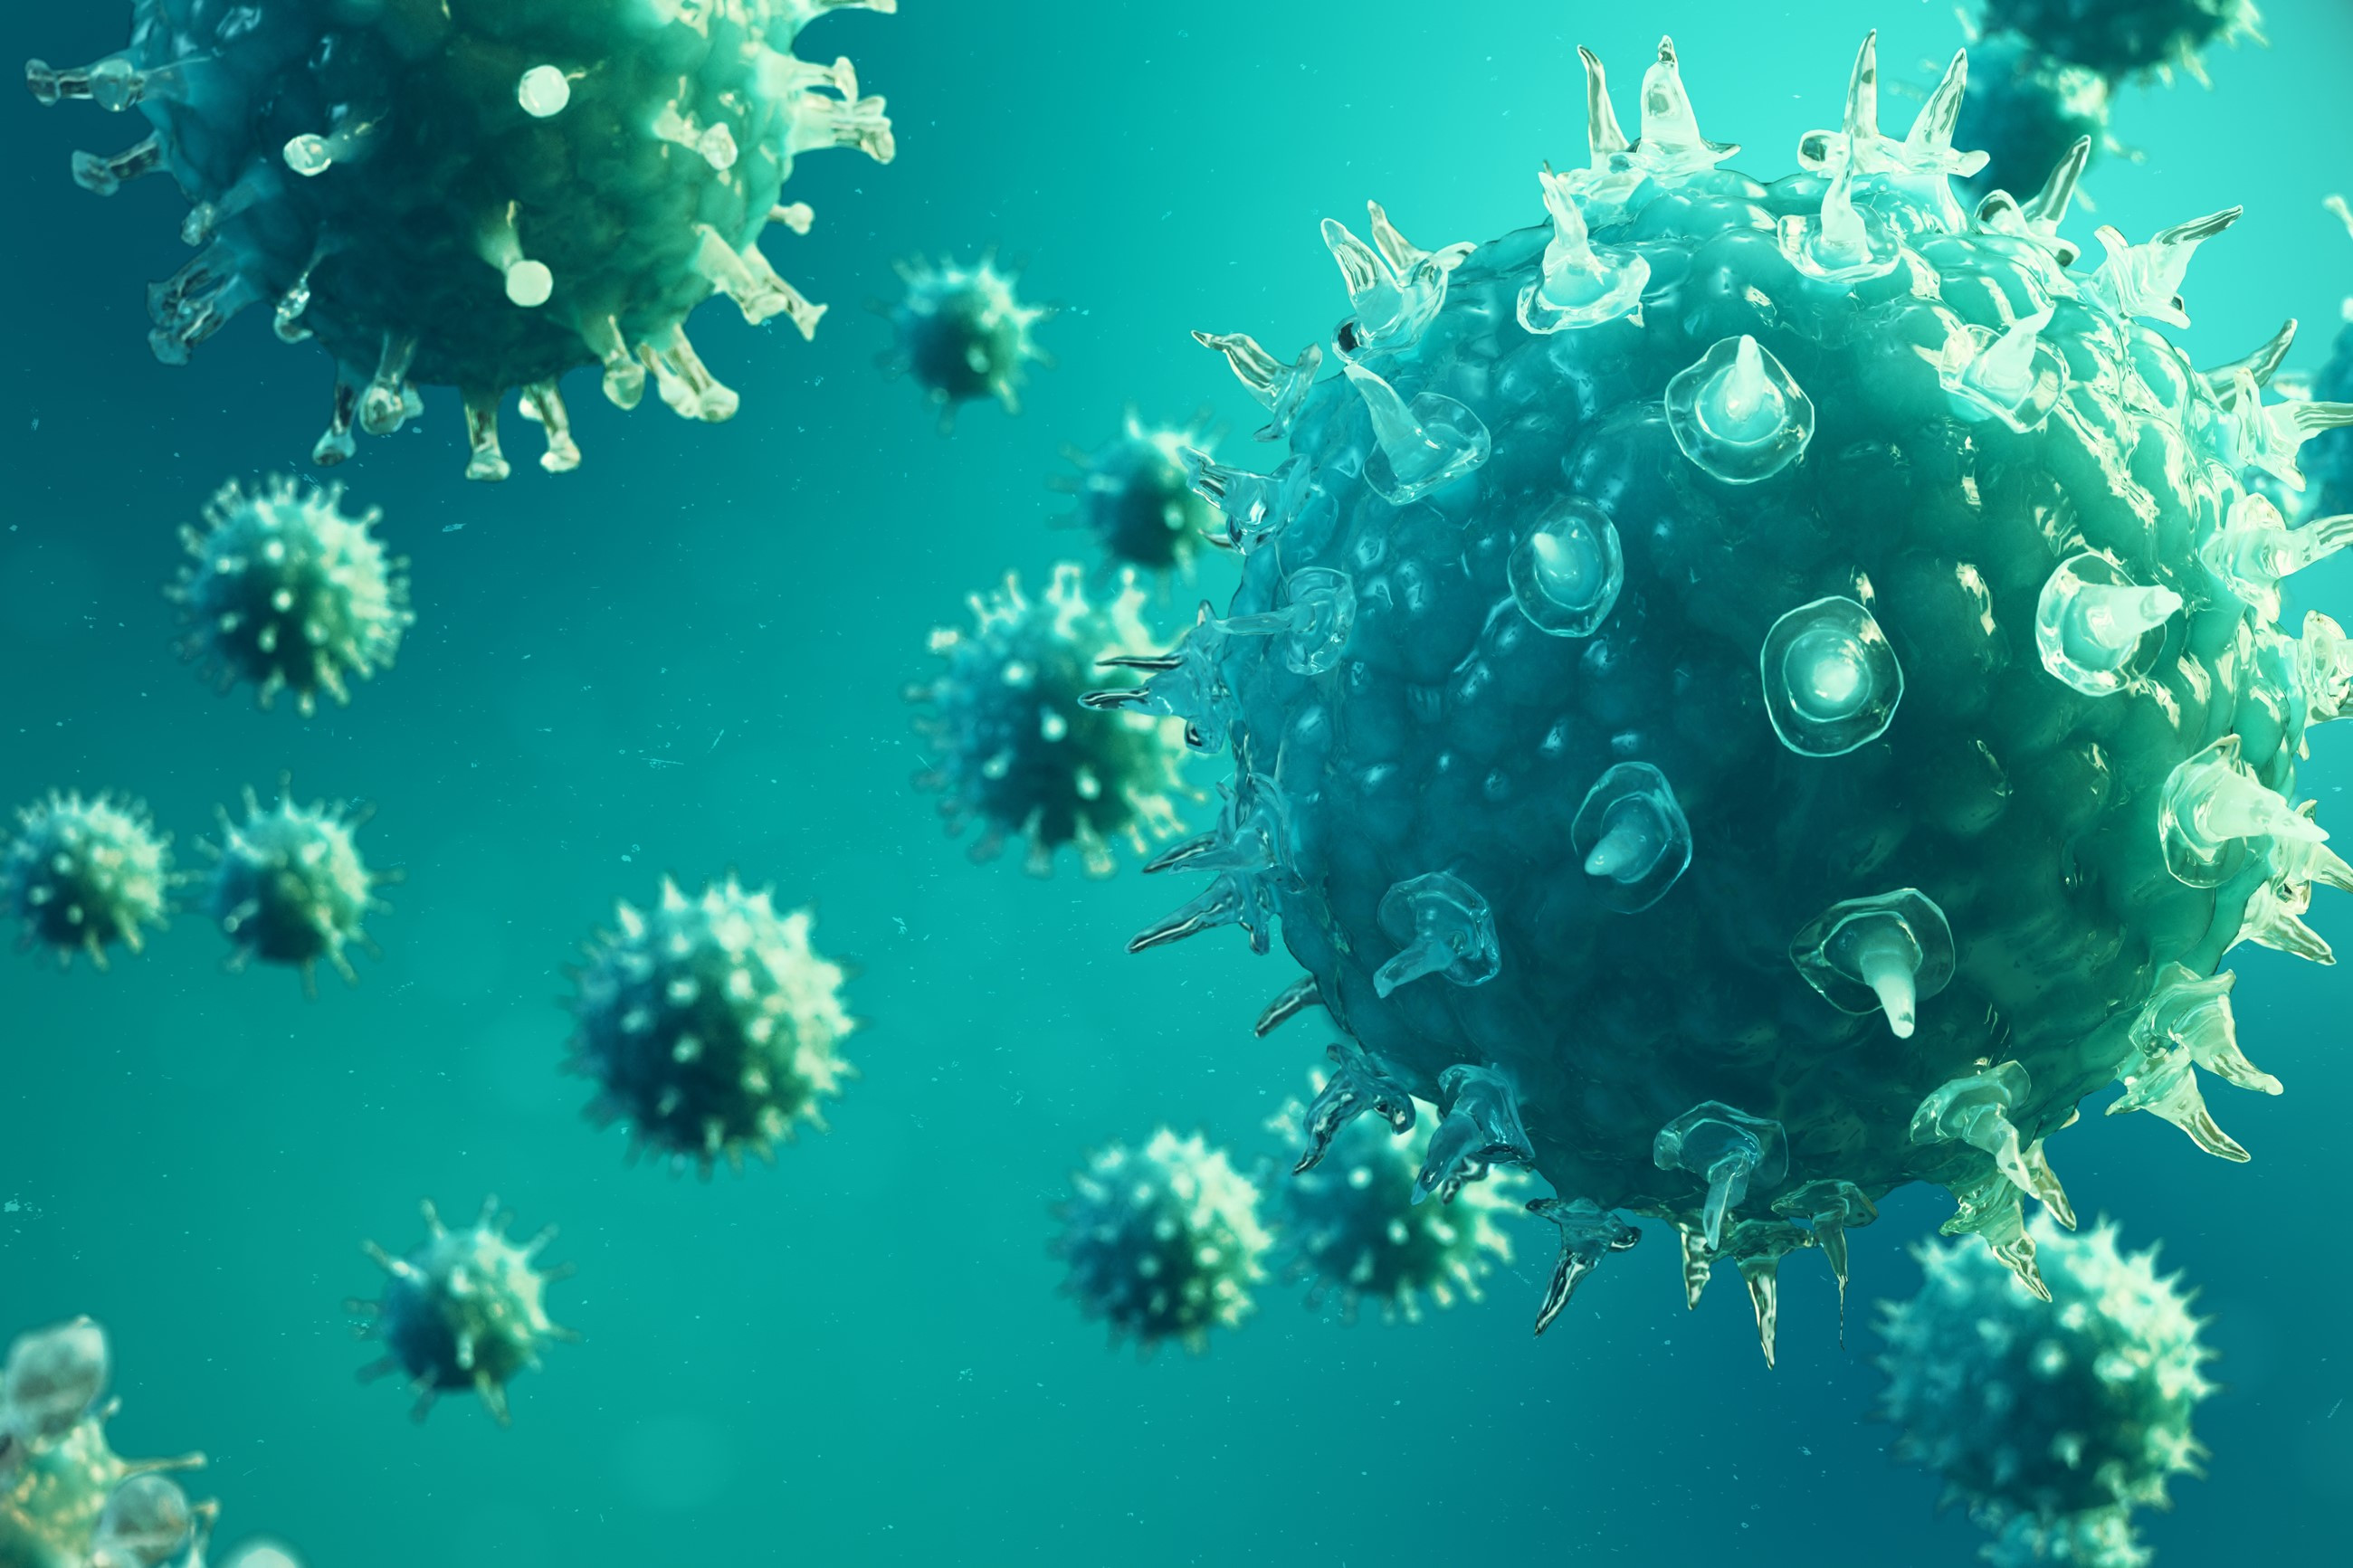 Картинки про вируса. Вирус коронавирус. Вирус Covid-19. Вирус карона коронавирус. Бактерия ковид 19.